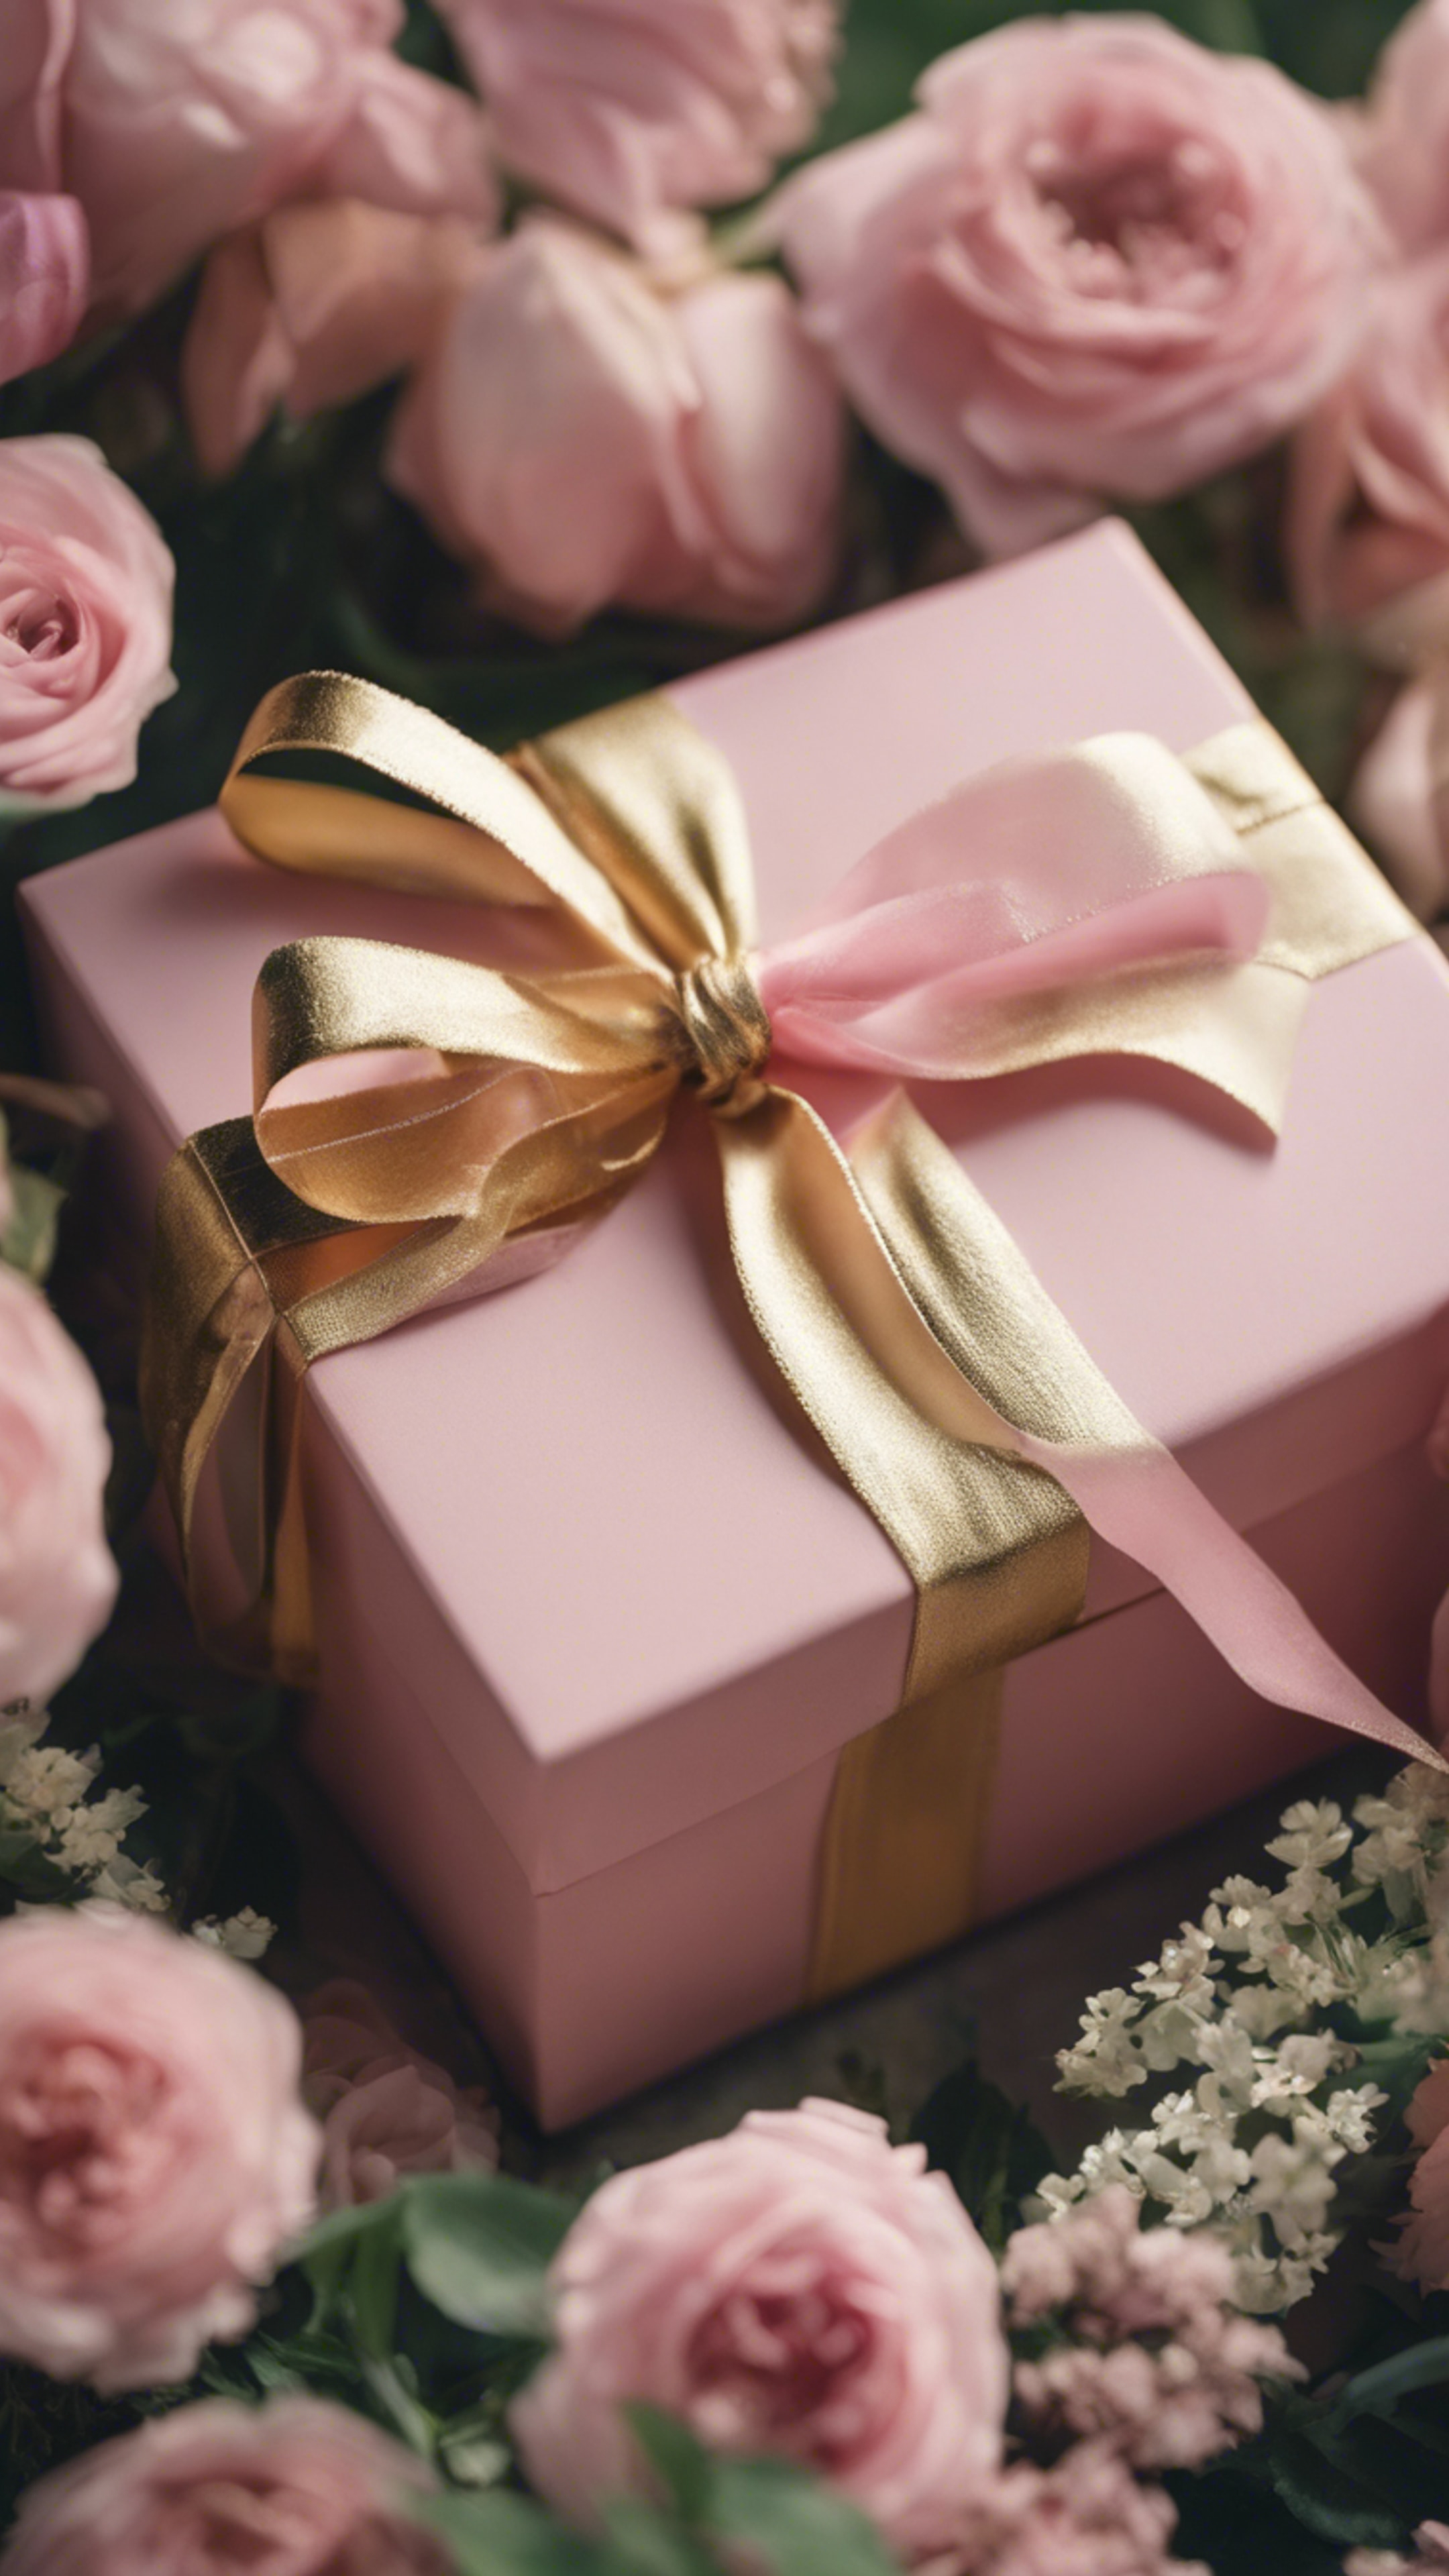 A gold-ribboned pink gift box nestled amongst flowers and greenery. Fond d'écran[057f26c1d4b14d2a96a8]